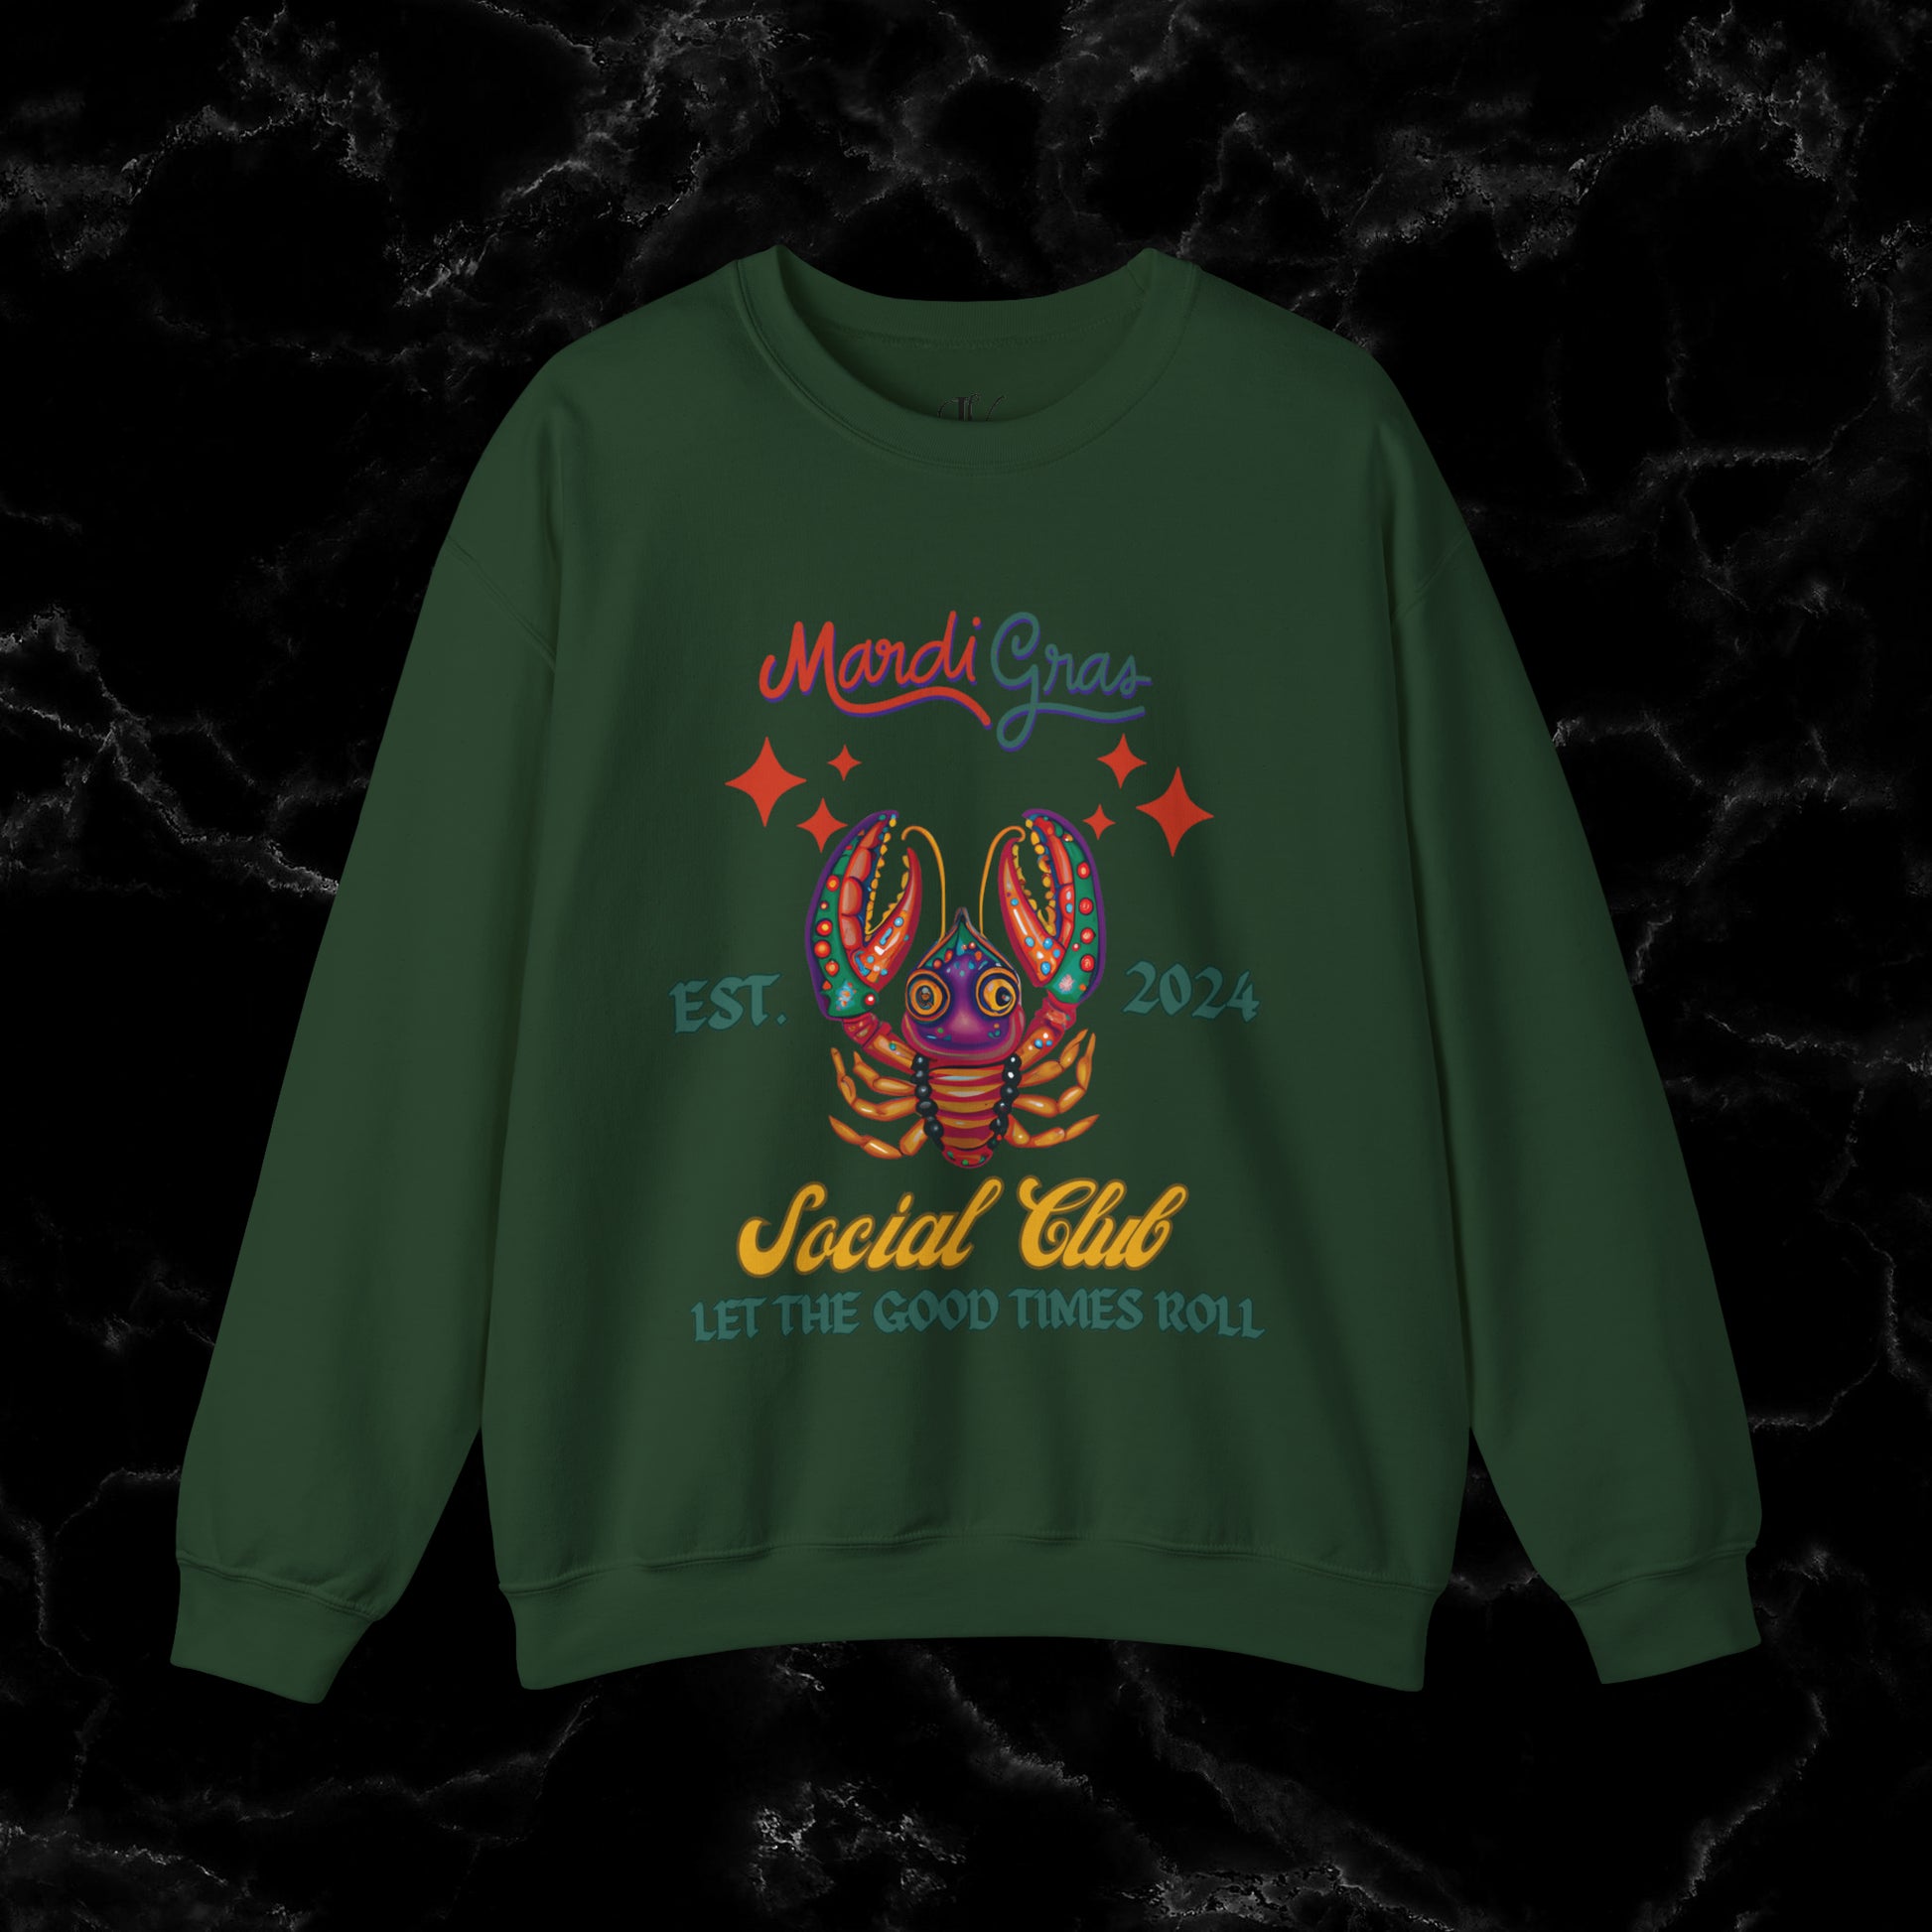 Mardi Gras Sweatshirt Women - NOLA Luxury Bachelorette Sweater, Unique Fat Tuesday Shirt, Louisiana Girls Trip Sweater, Mardi Gras Social Club Style Sweatshirt S Forest Green 